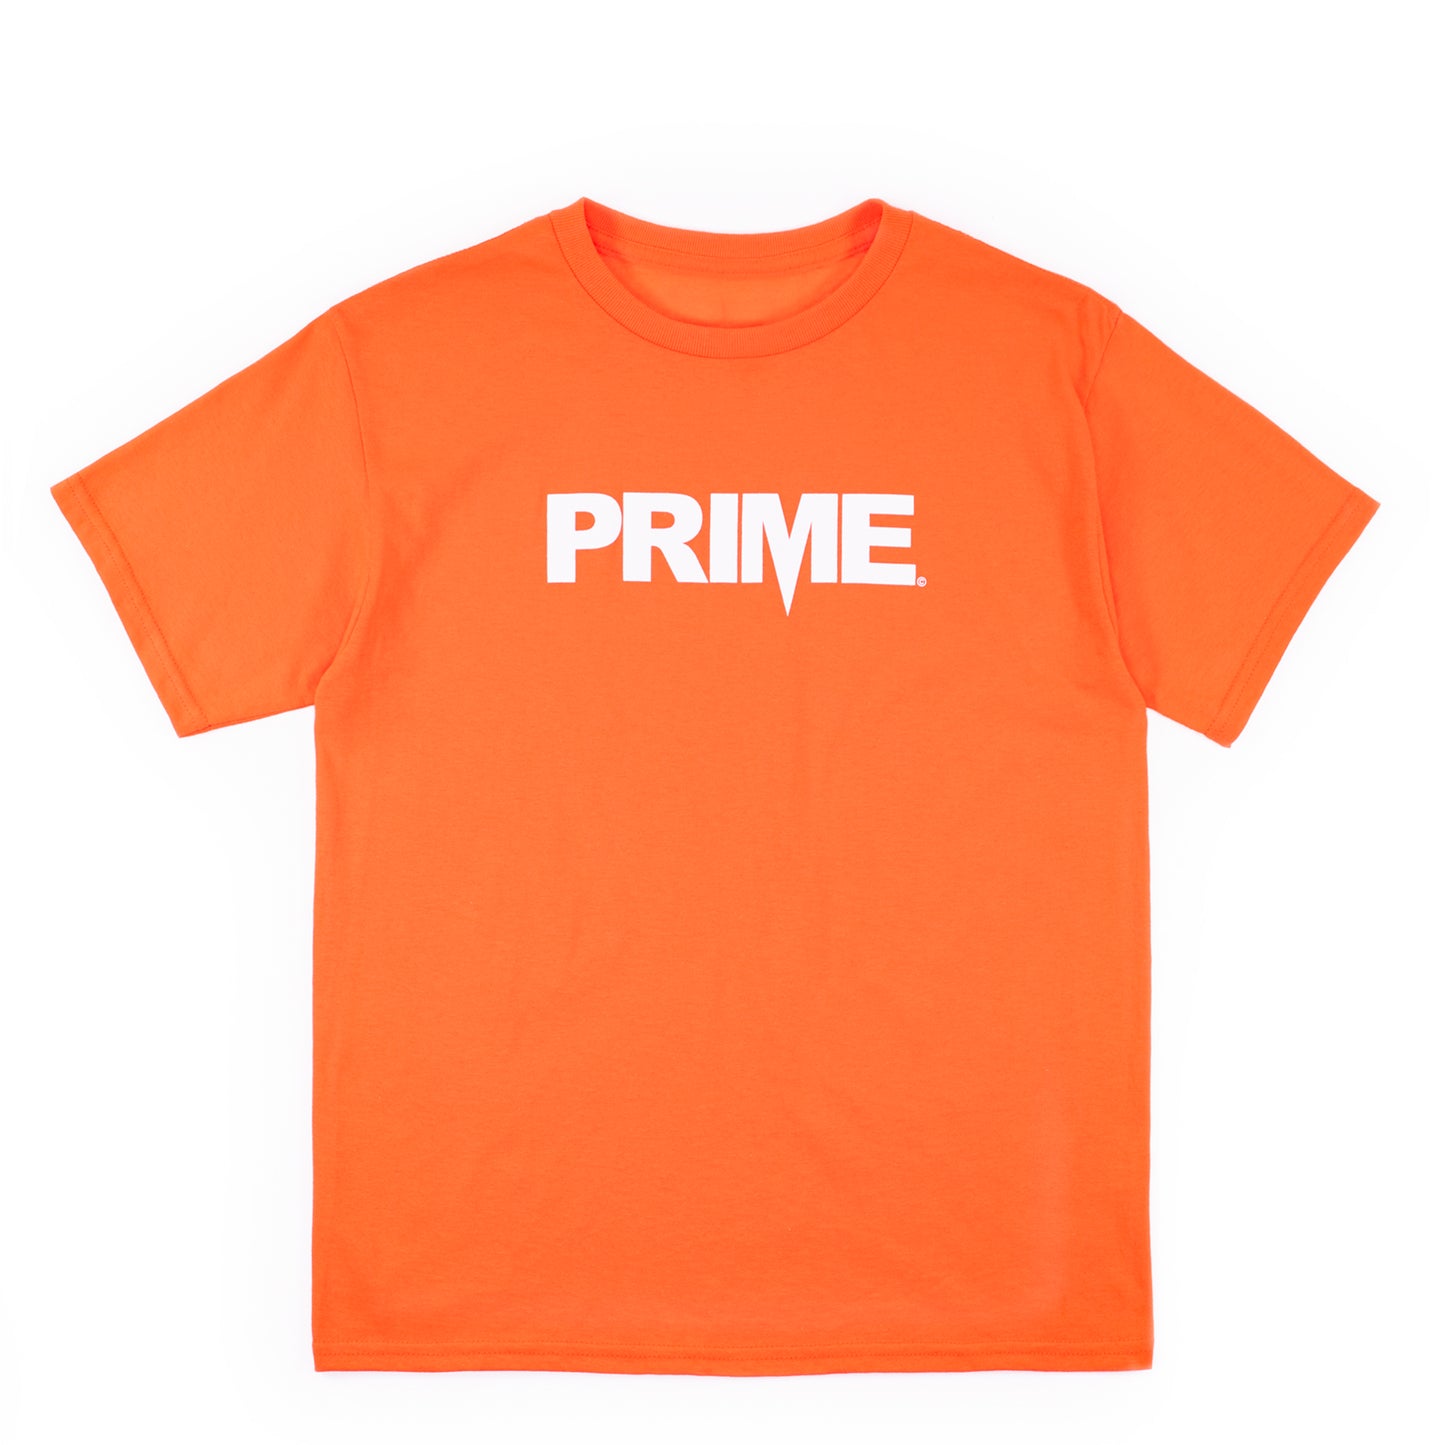 Prime Delux OG Logo Kids T Shirt - Orange / White - Prime Delux Store